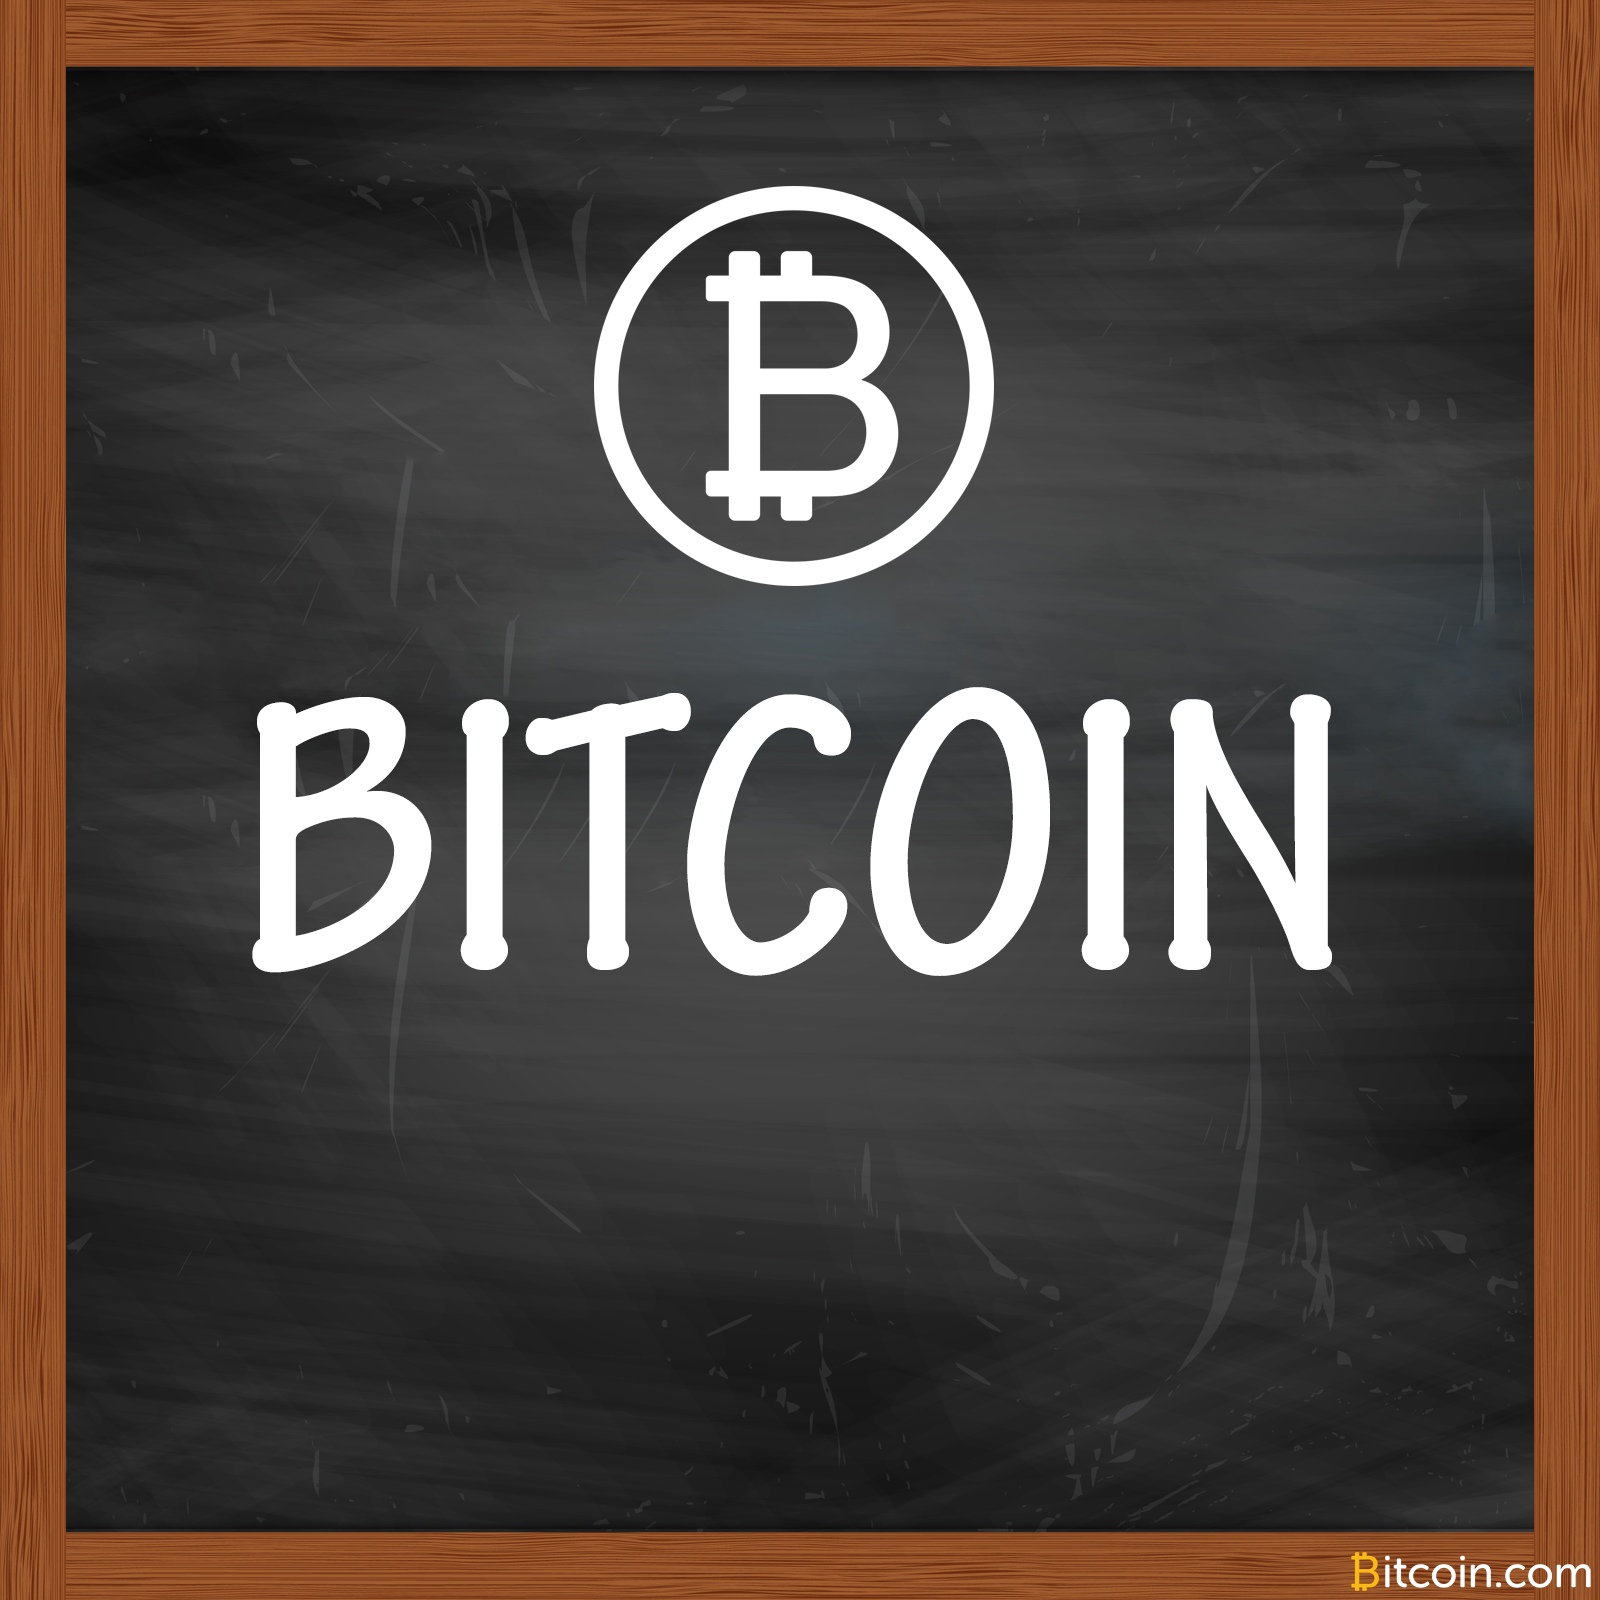 Education Initiatives Increase Bitcoin Adoption